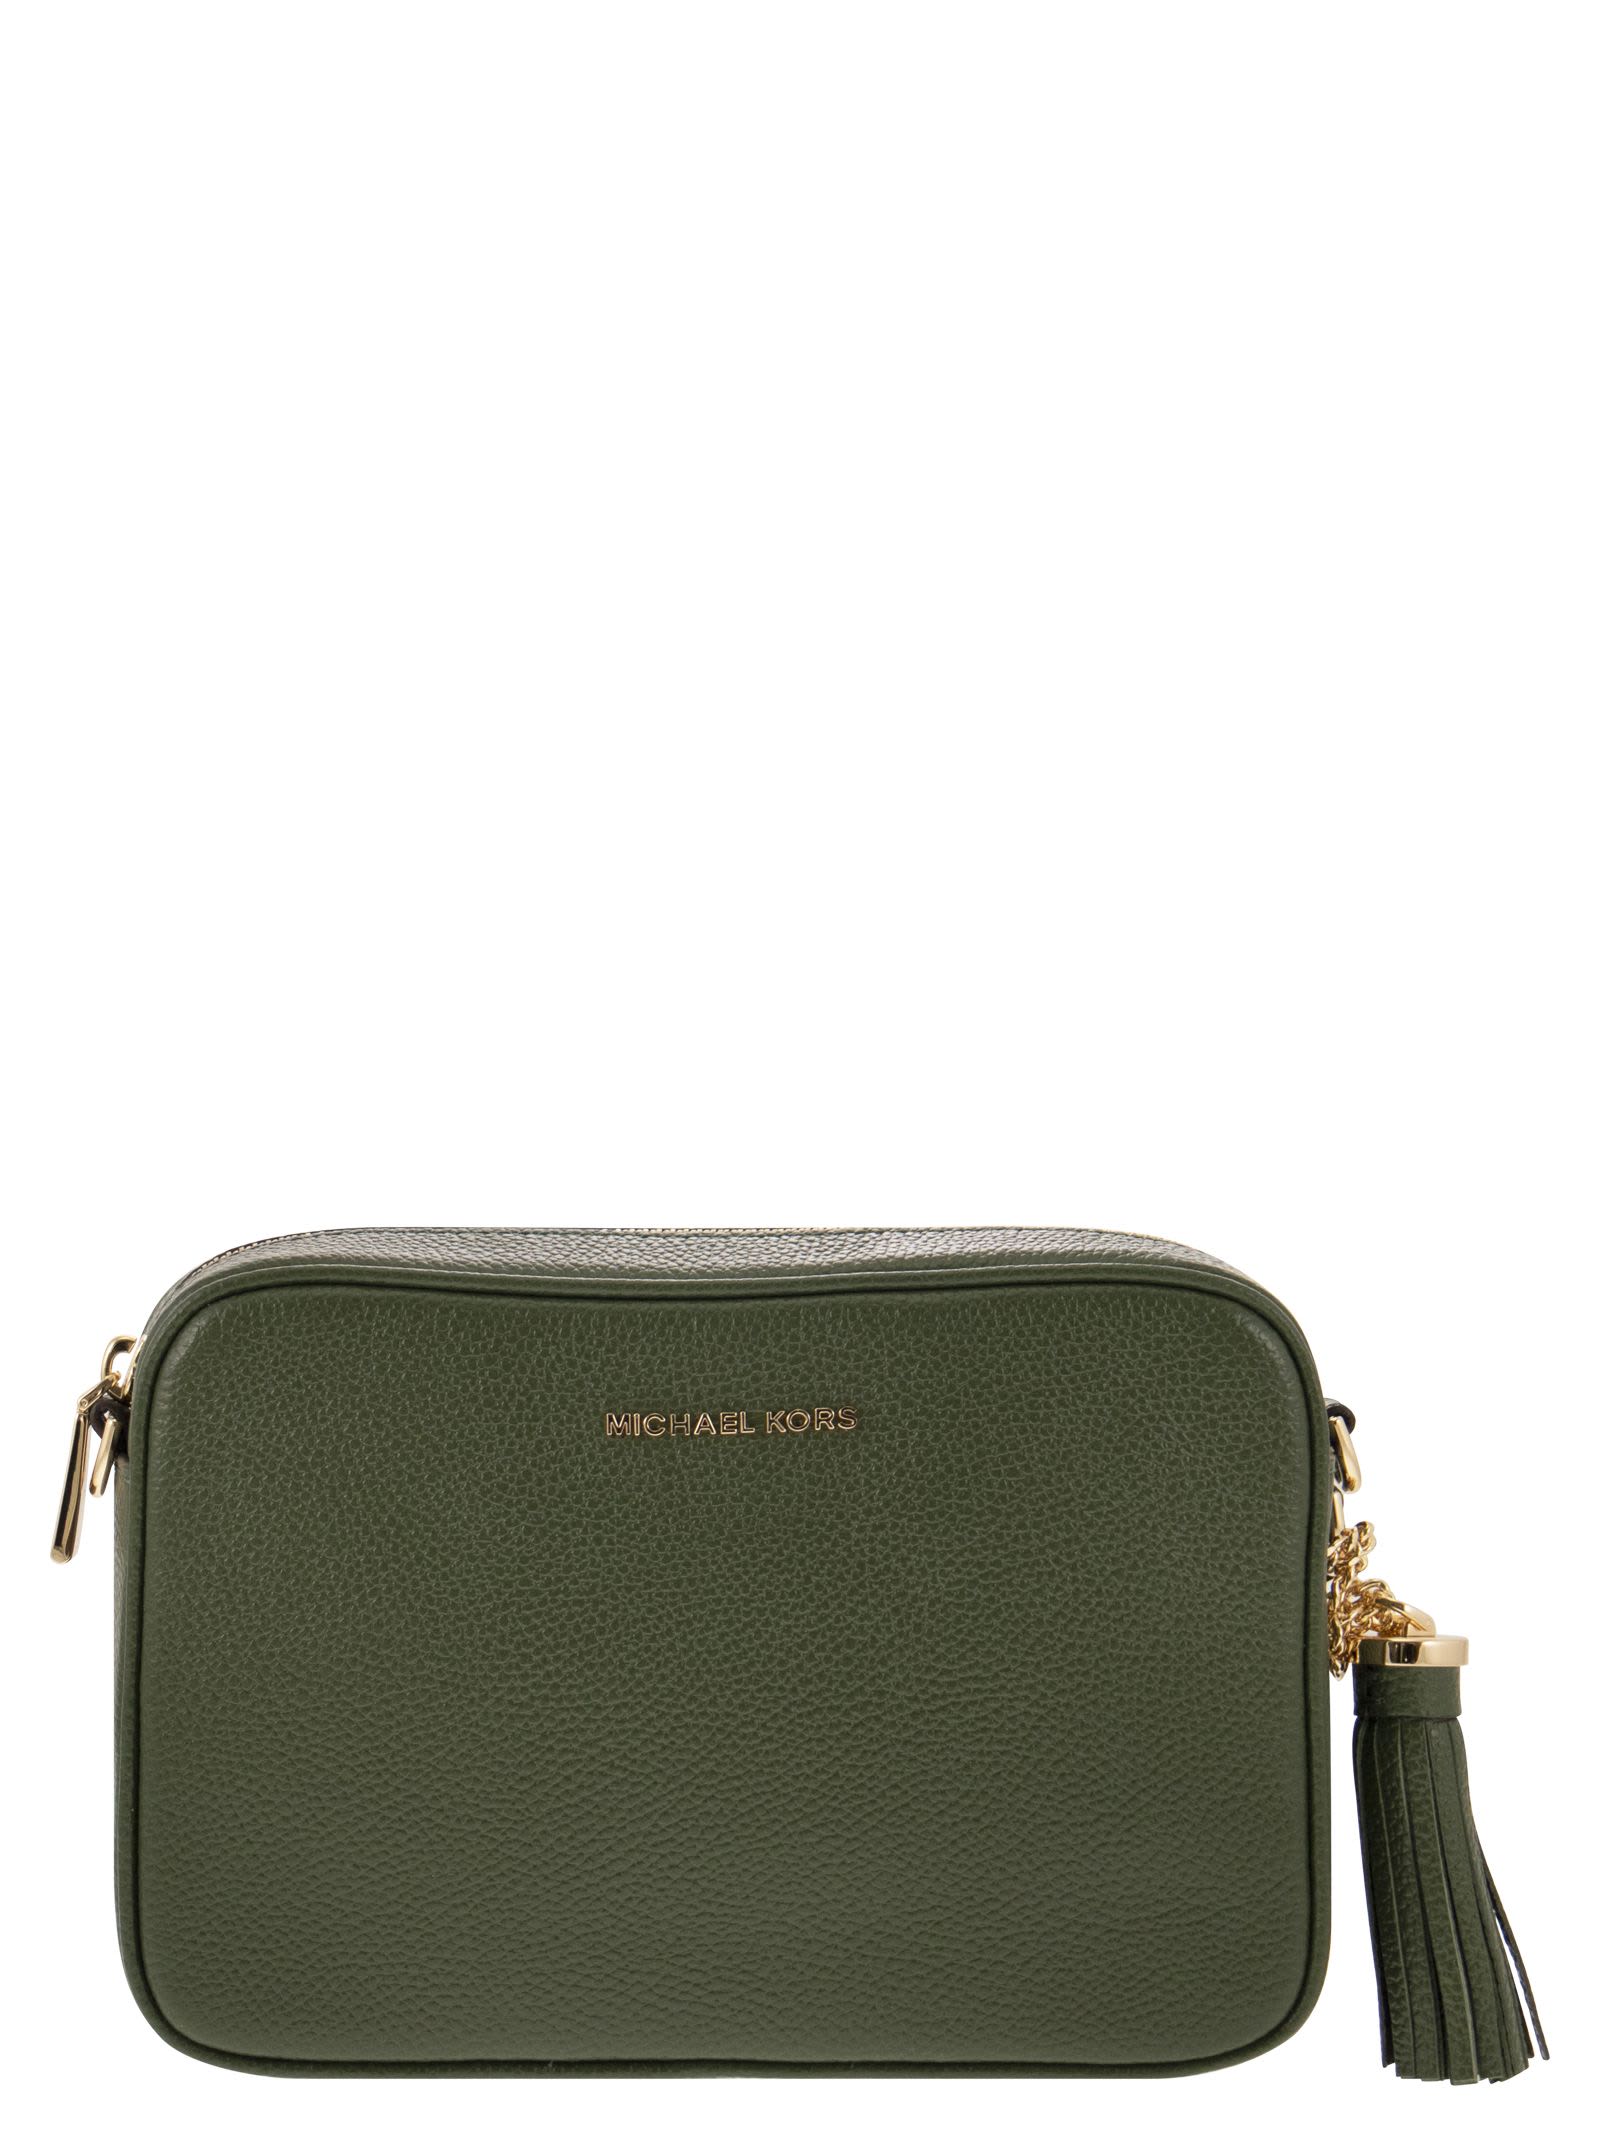 Buy Michael Kors Ginny Crossbody Bag from £153.20 (Today) – Best